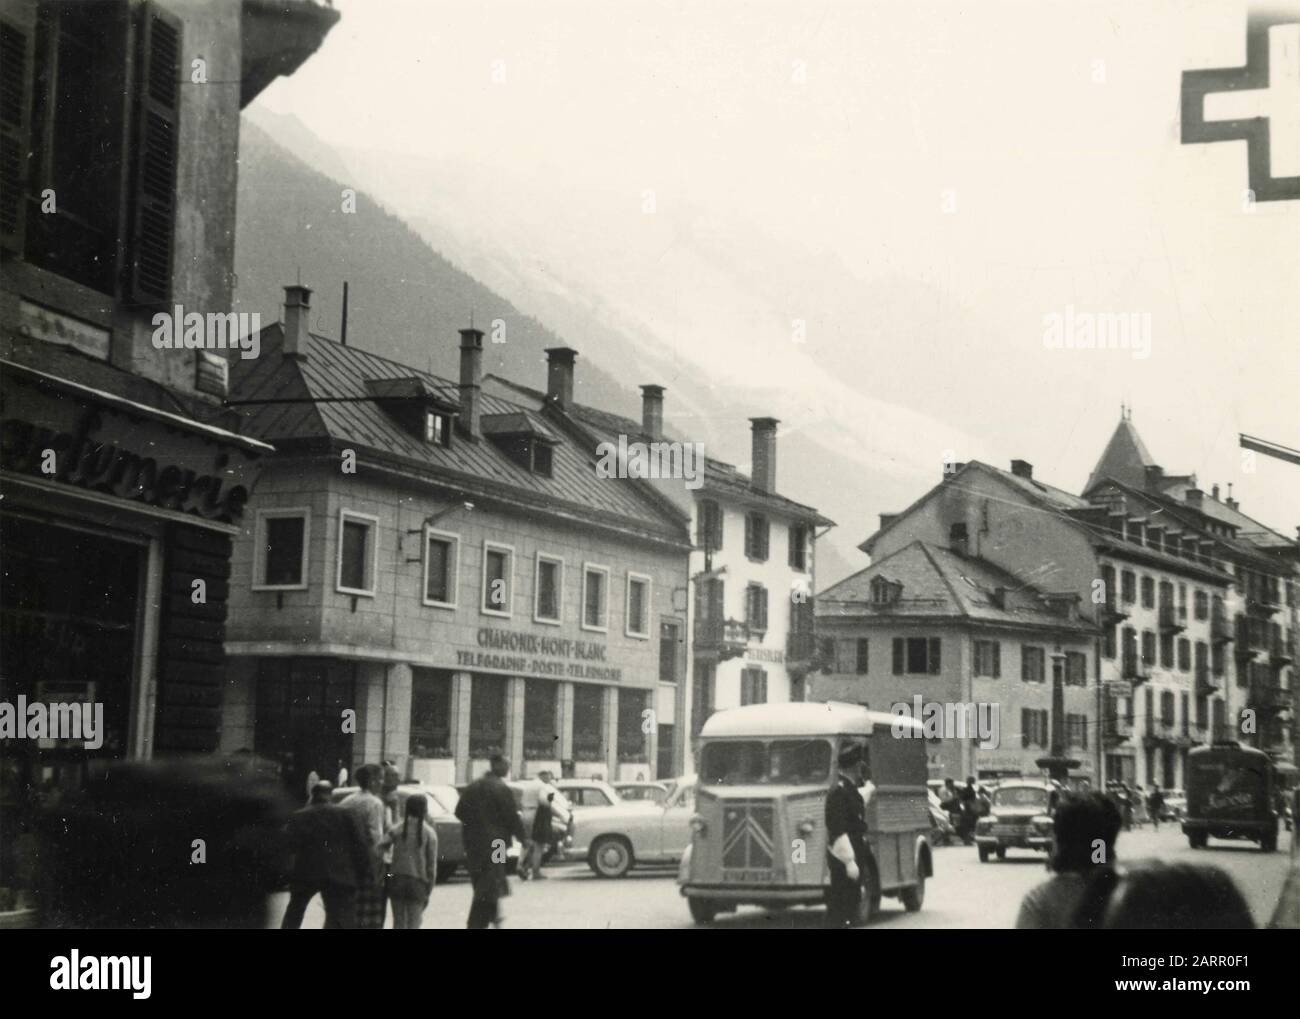 View of Chamonix main road, France 1957 Stock Photo